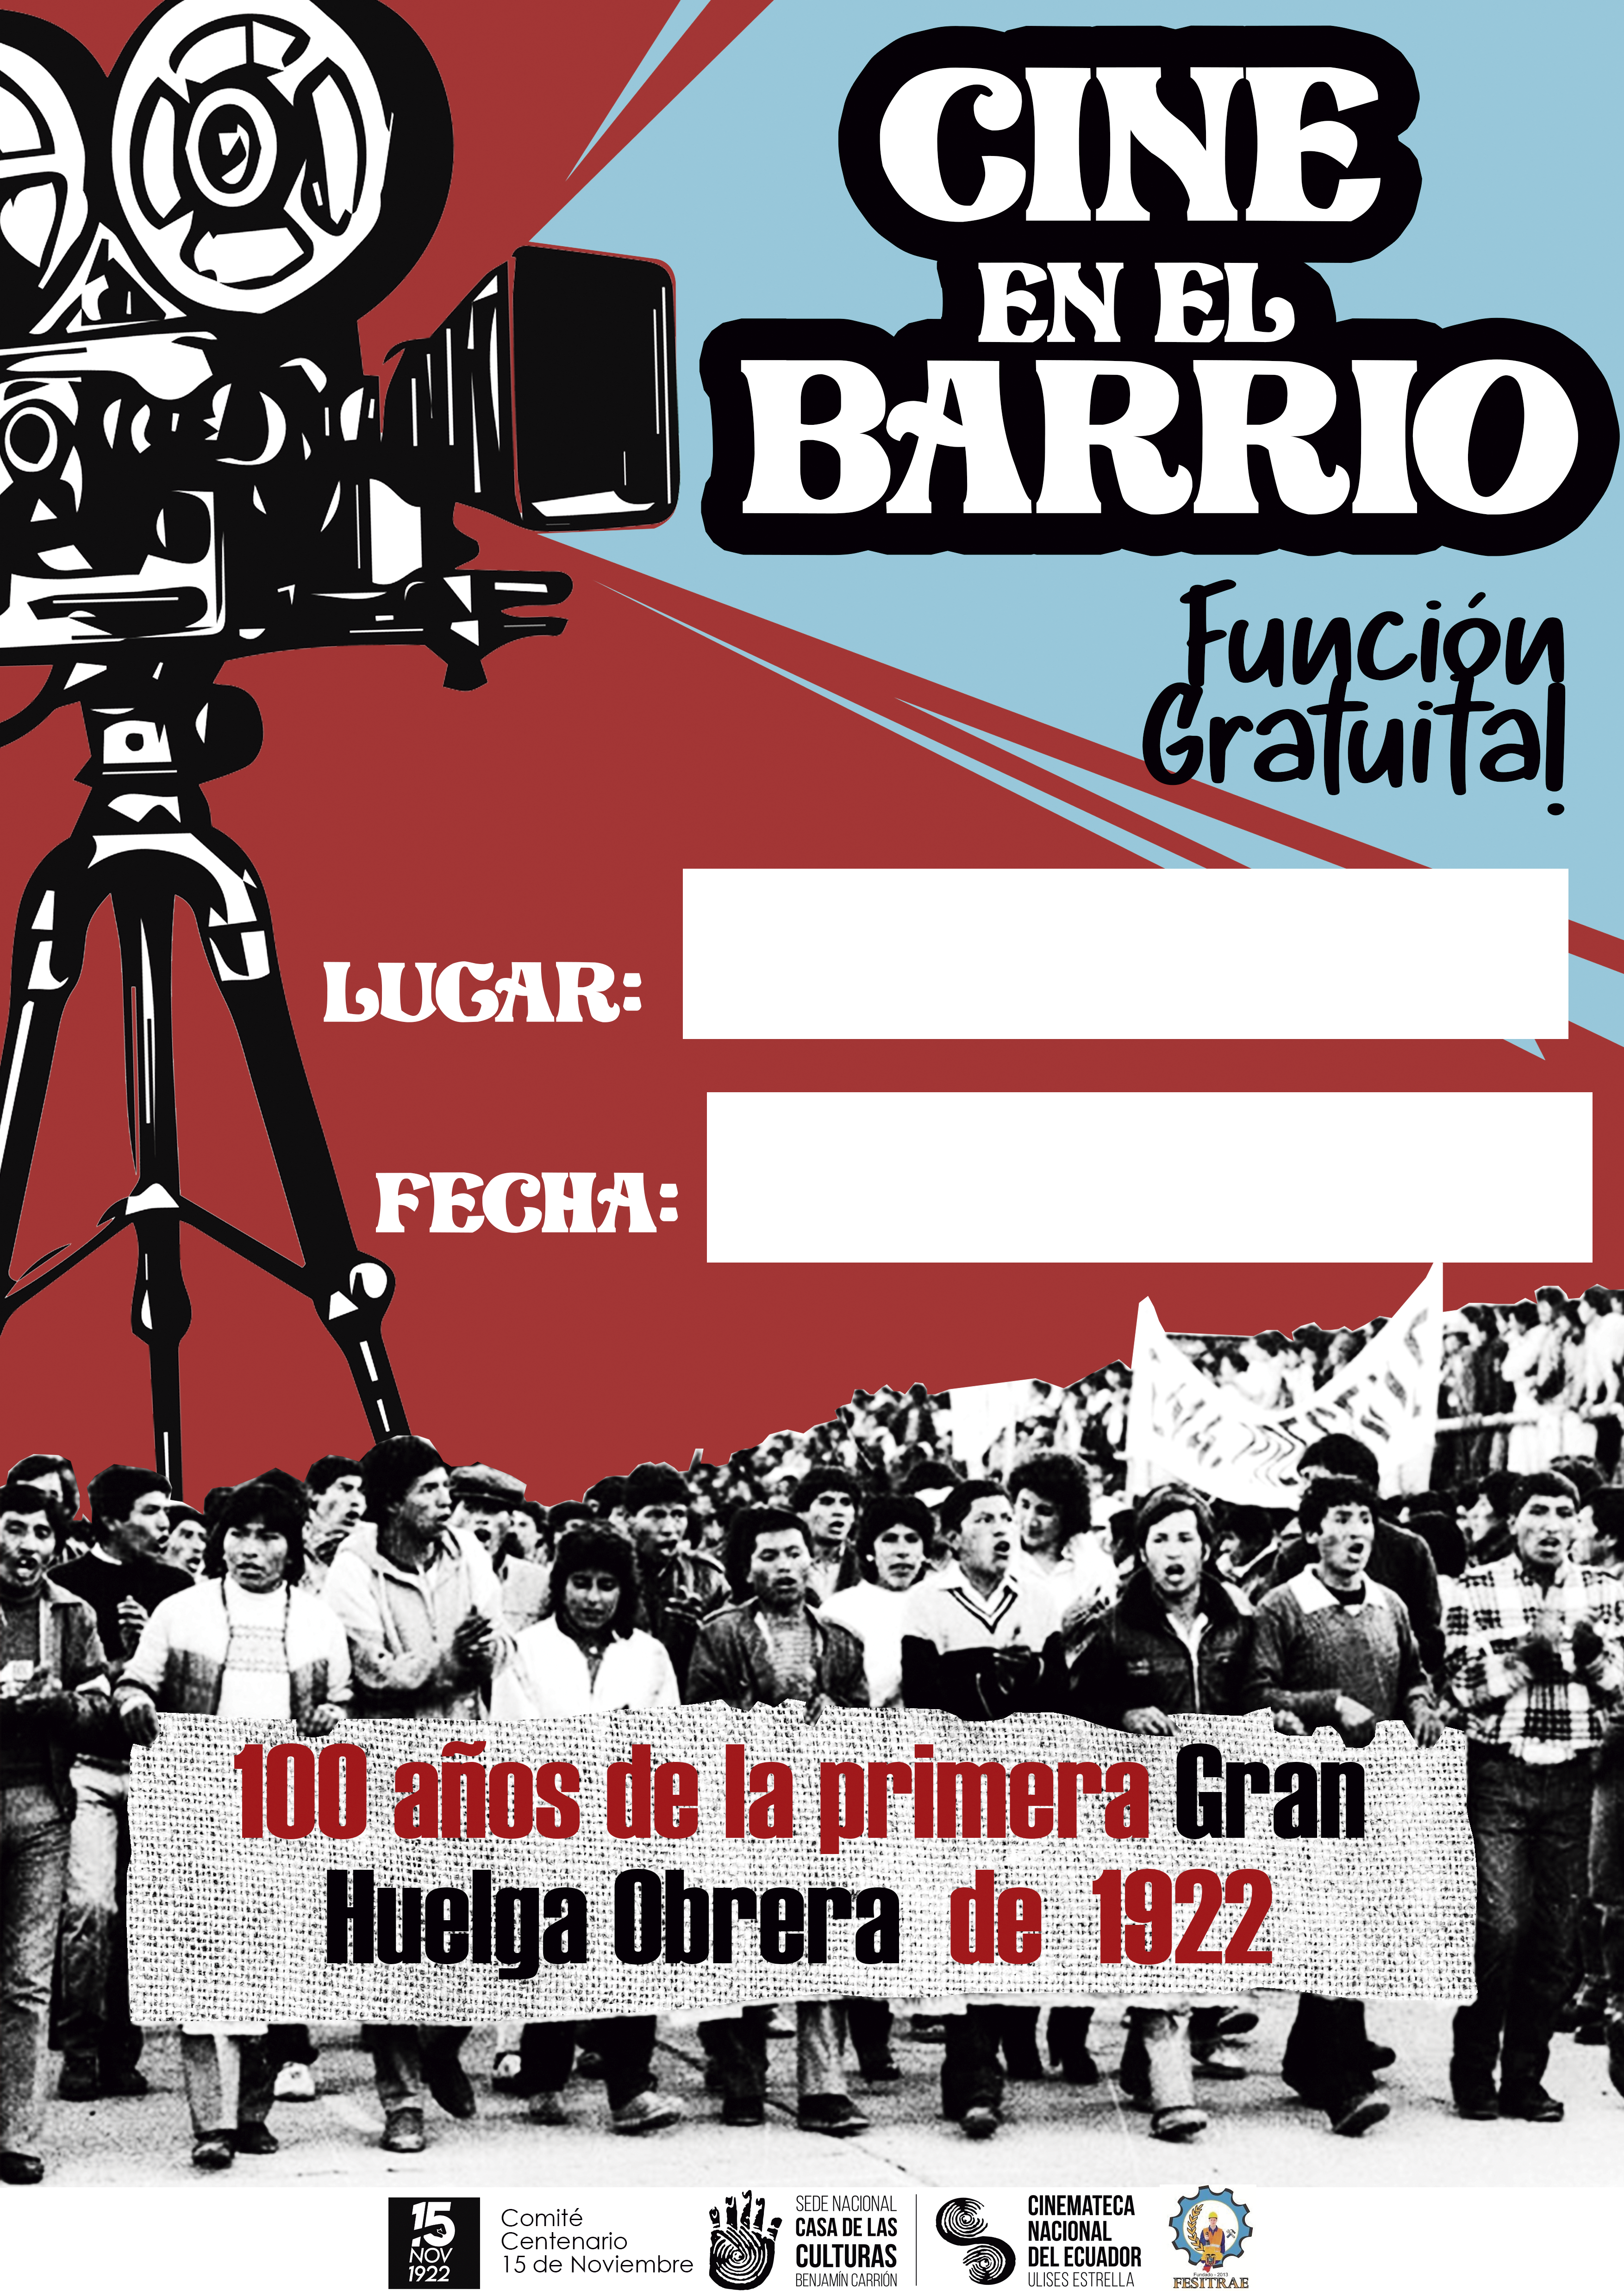 CineBarrio